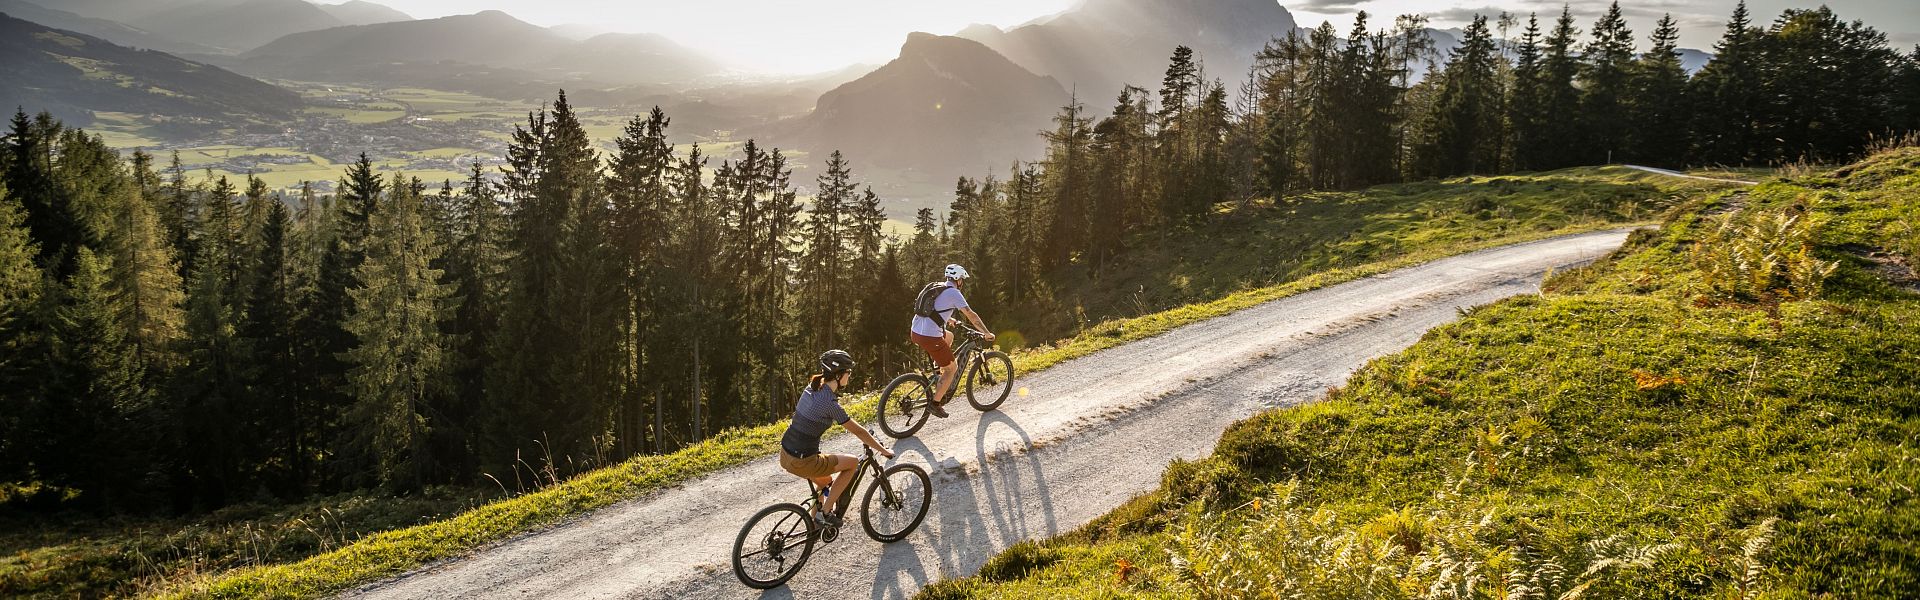 E-Bike Tour mit Wilder Kaiser - Region St. Johann in Tirol